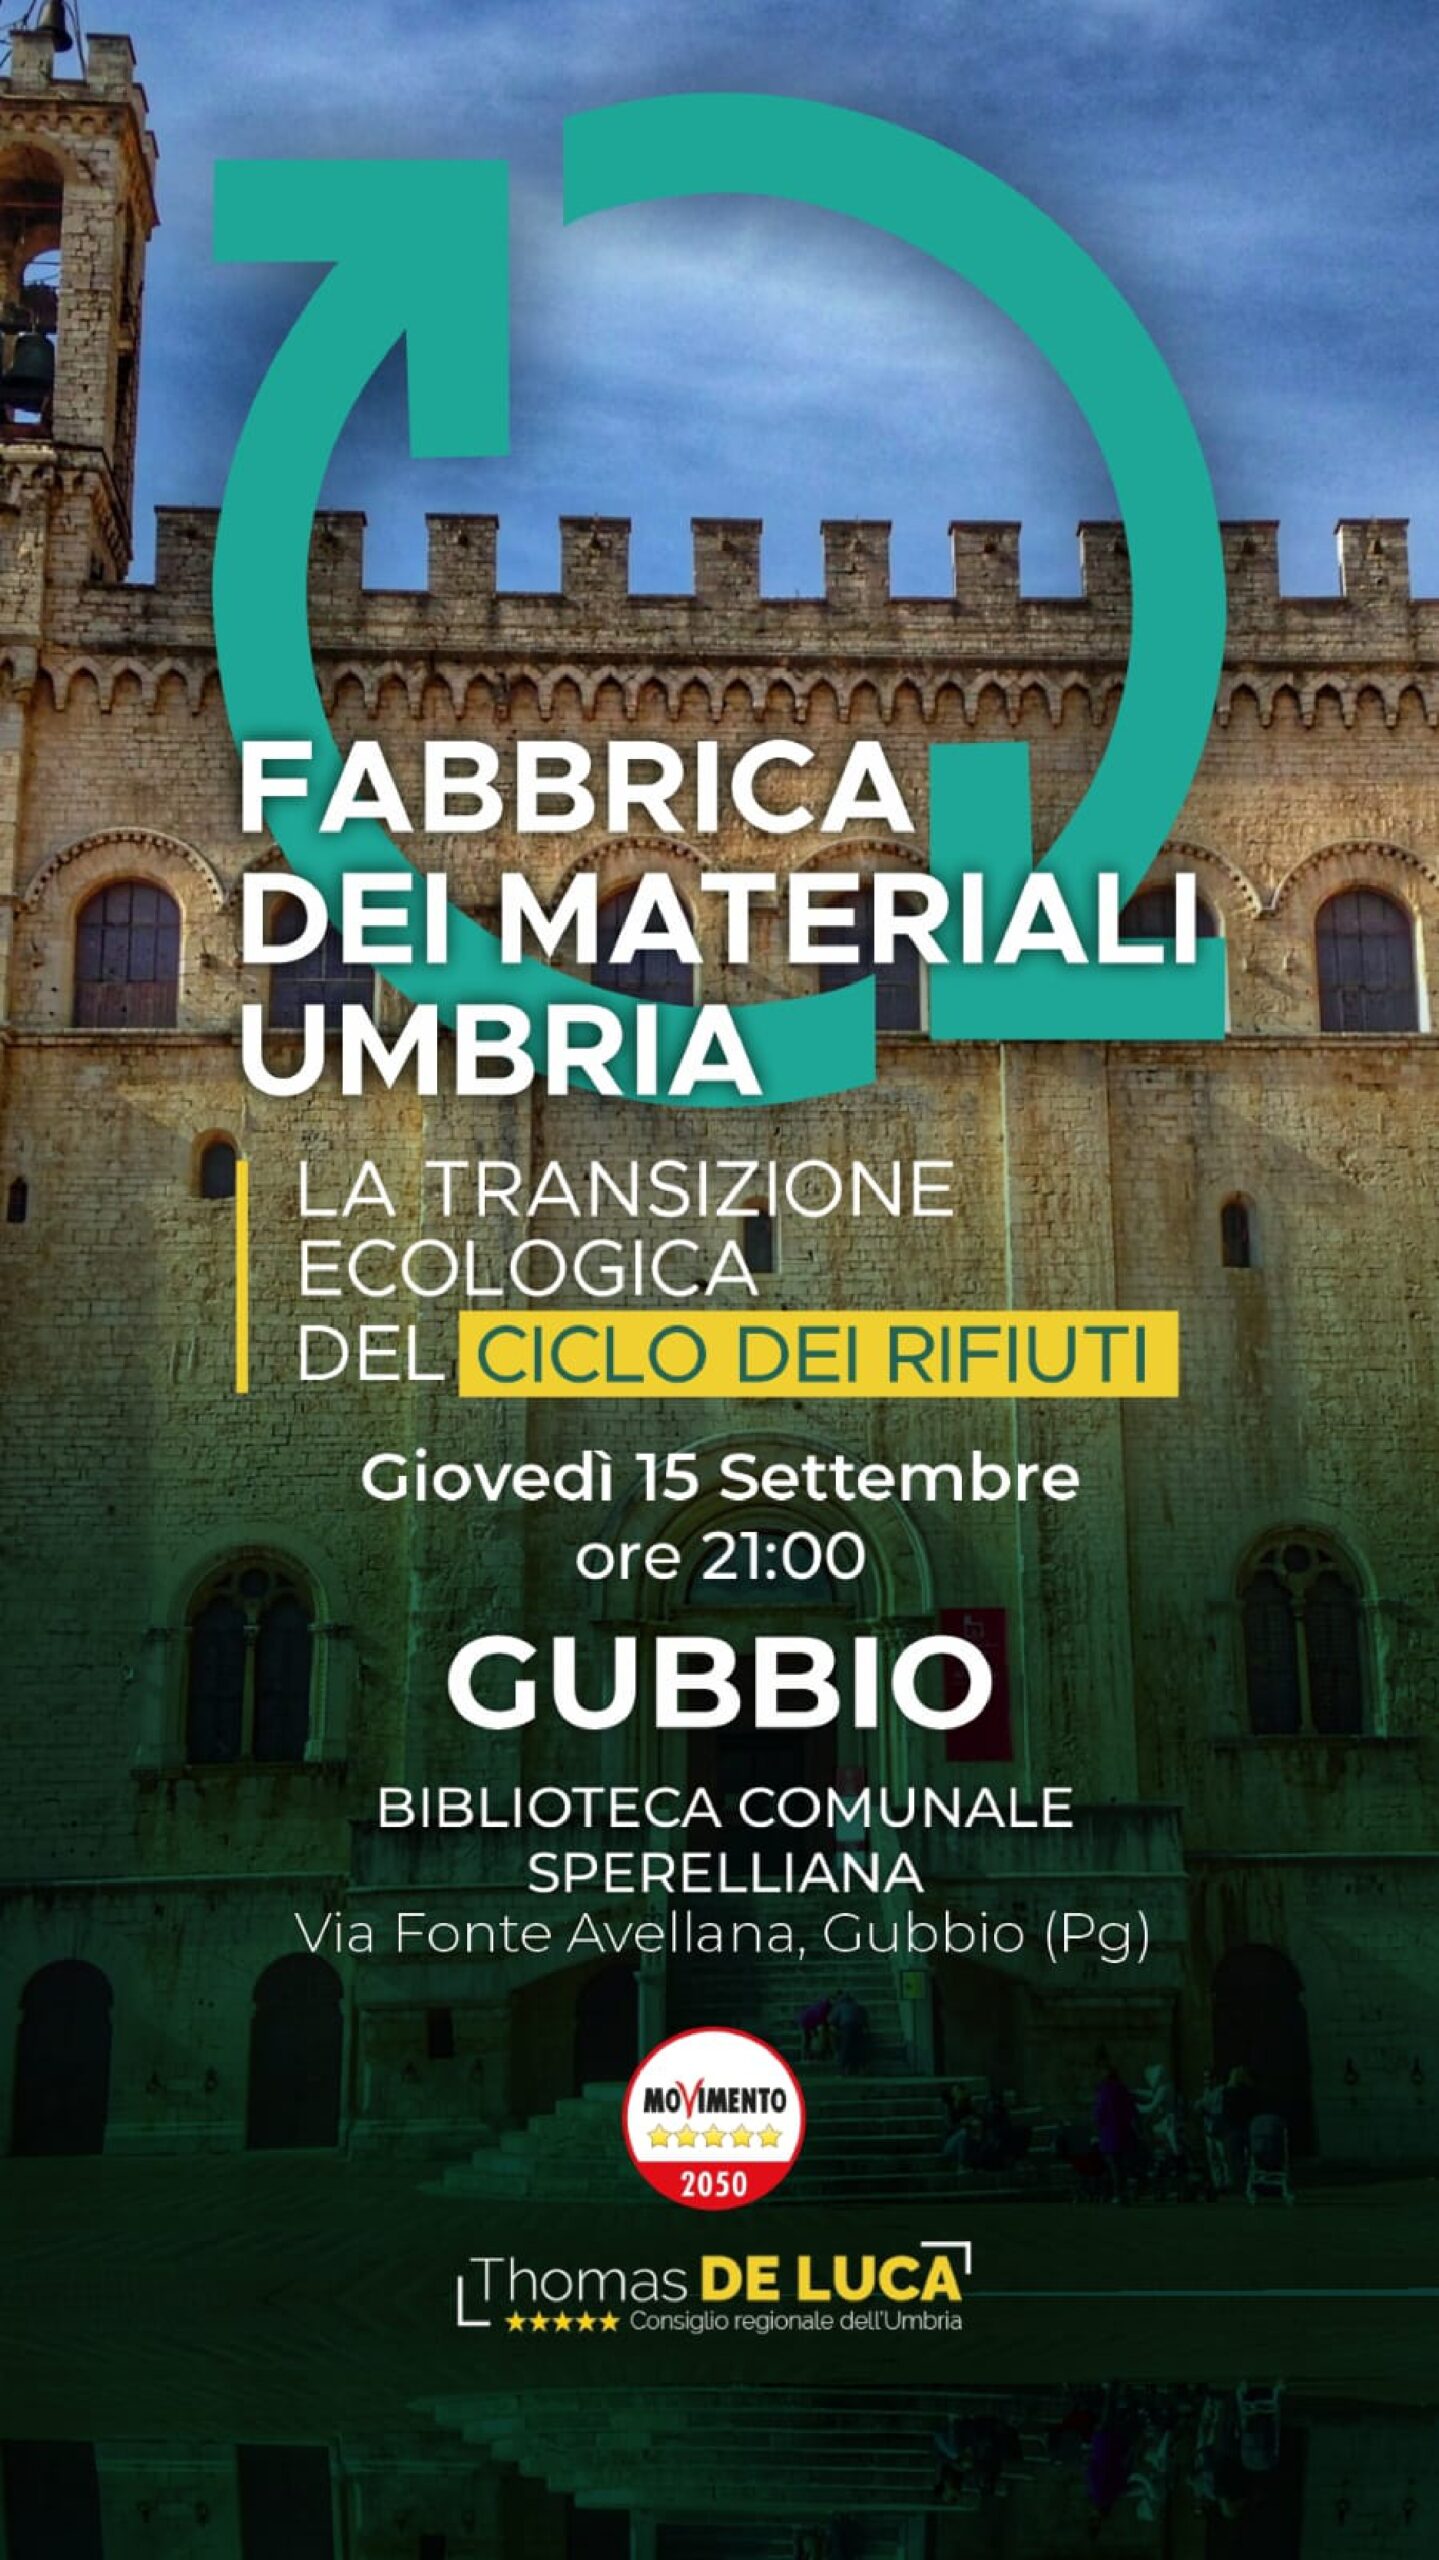 Evento-Fabbrica-dei-Materiali-Umbria_page-0001-scaled 1326